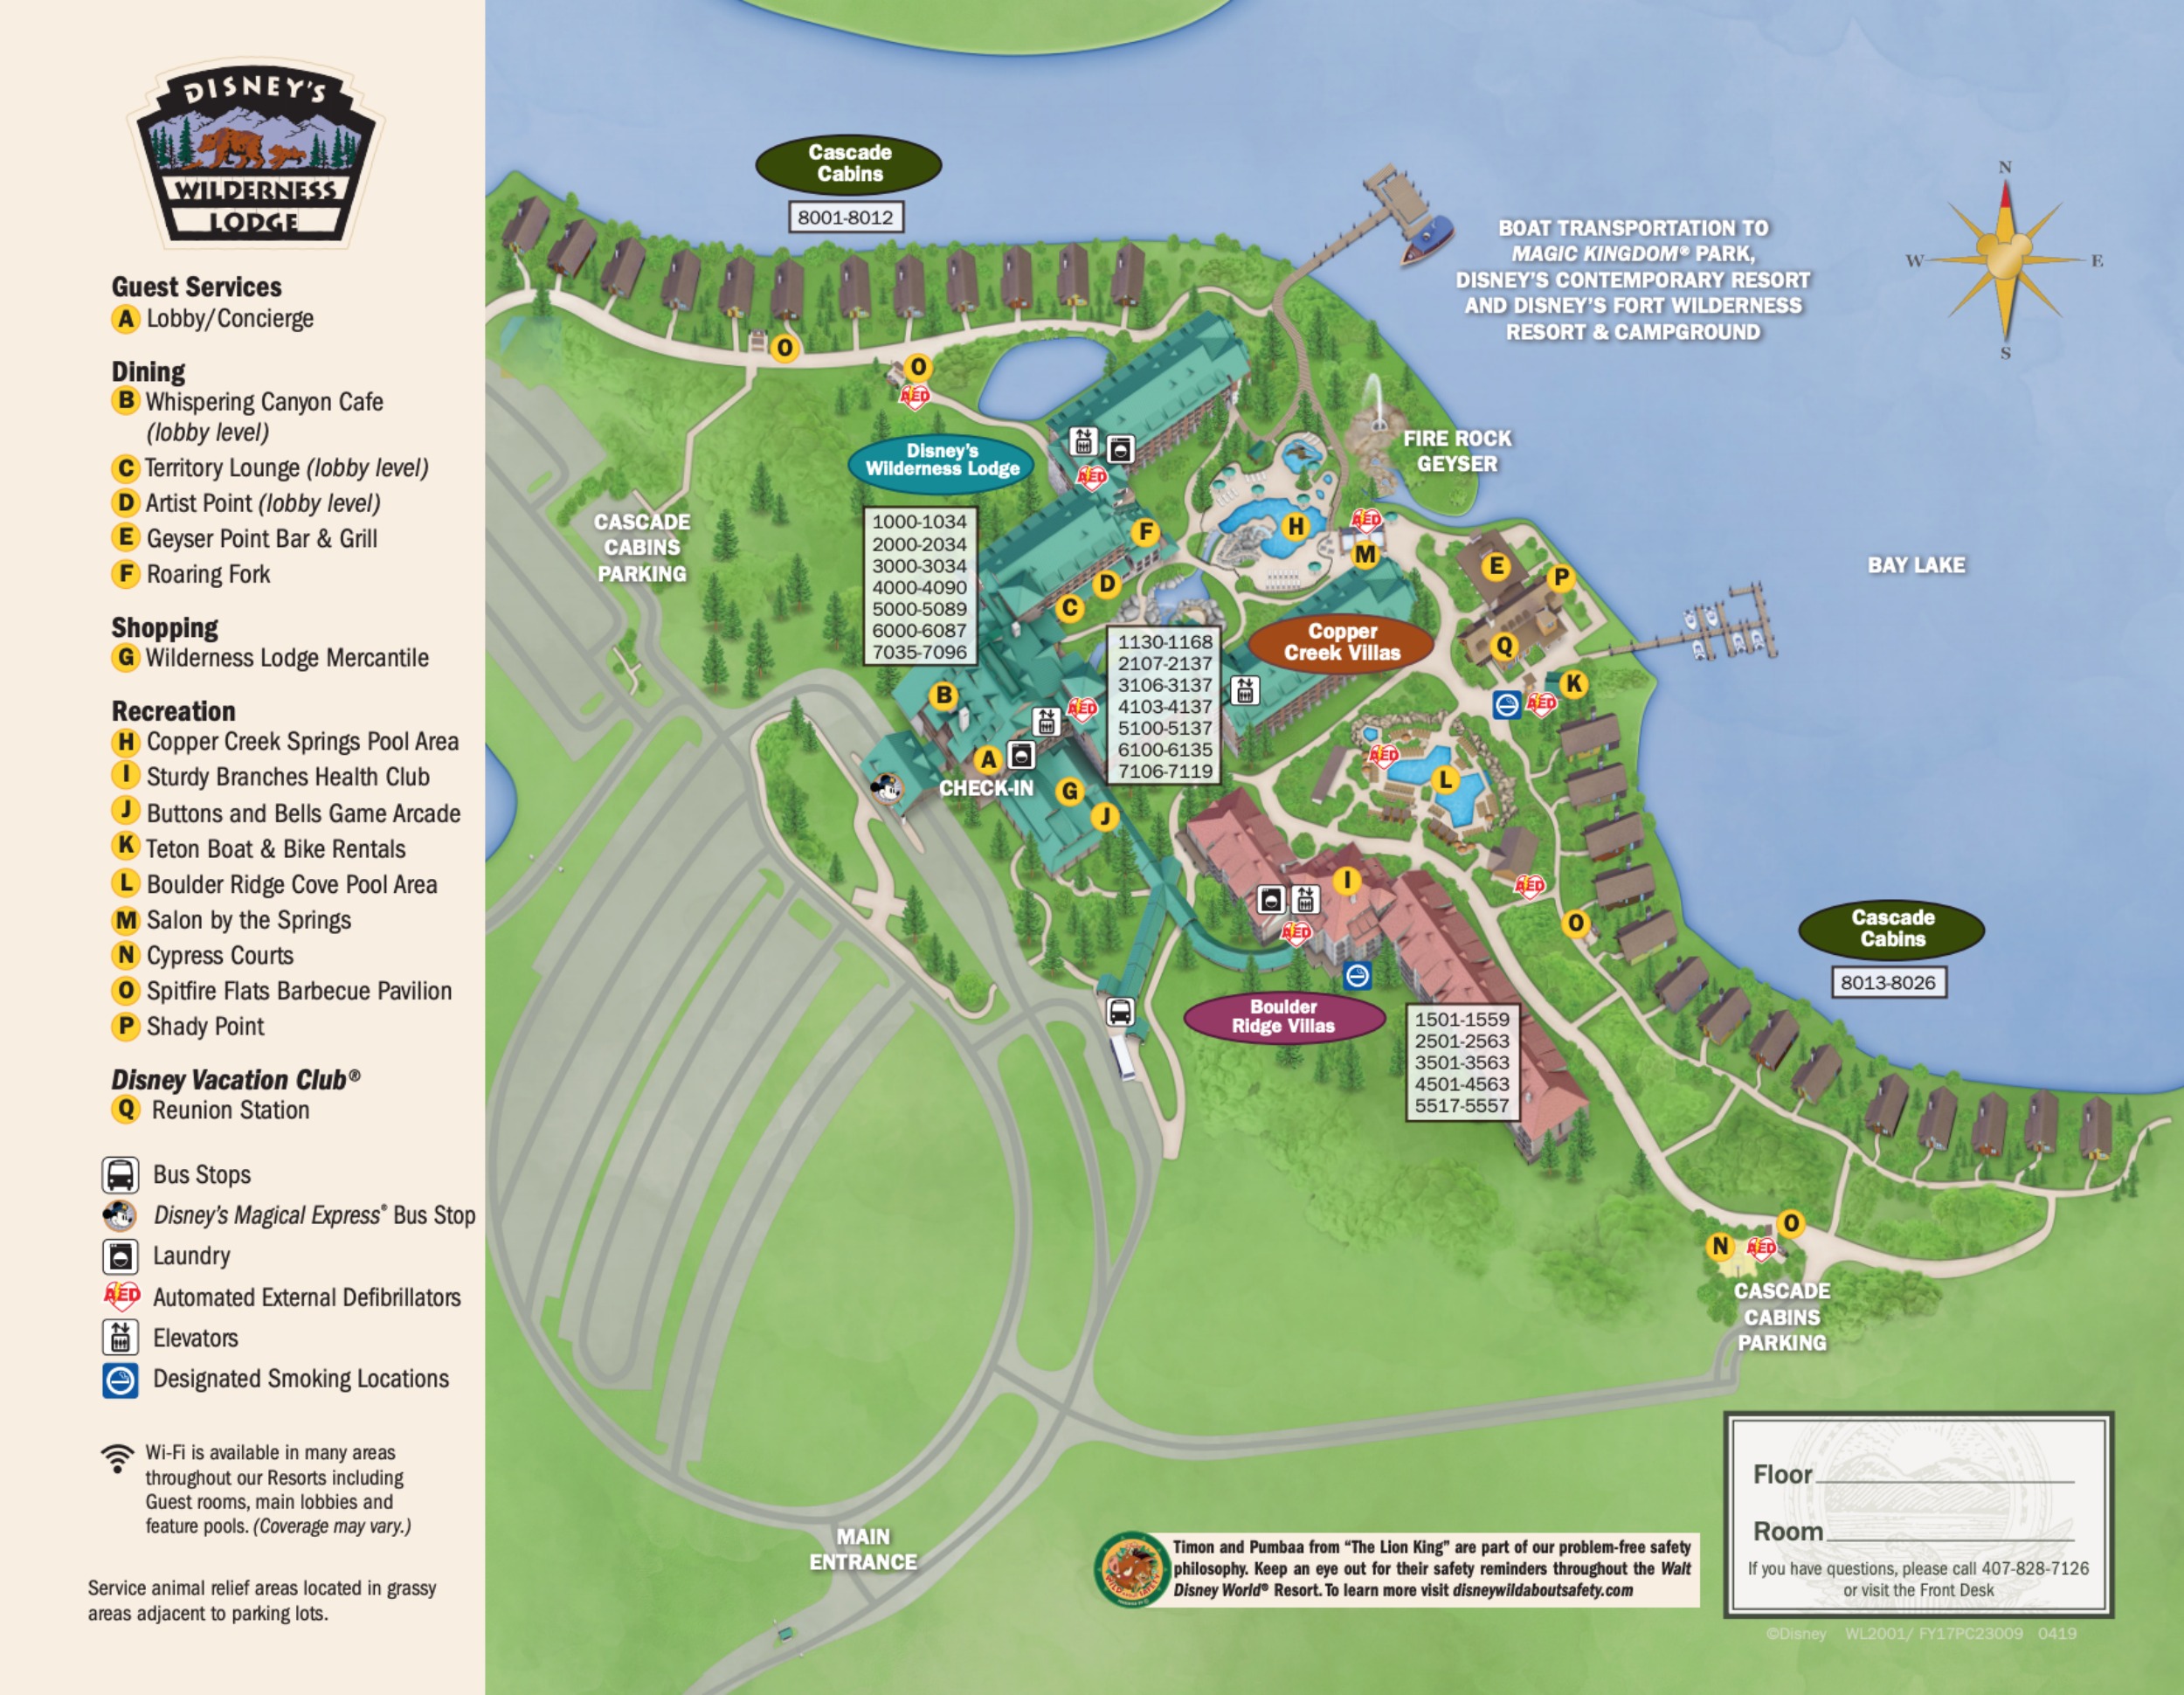 Disney's Wilderness Lodge map 